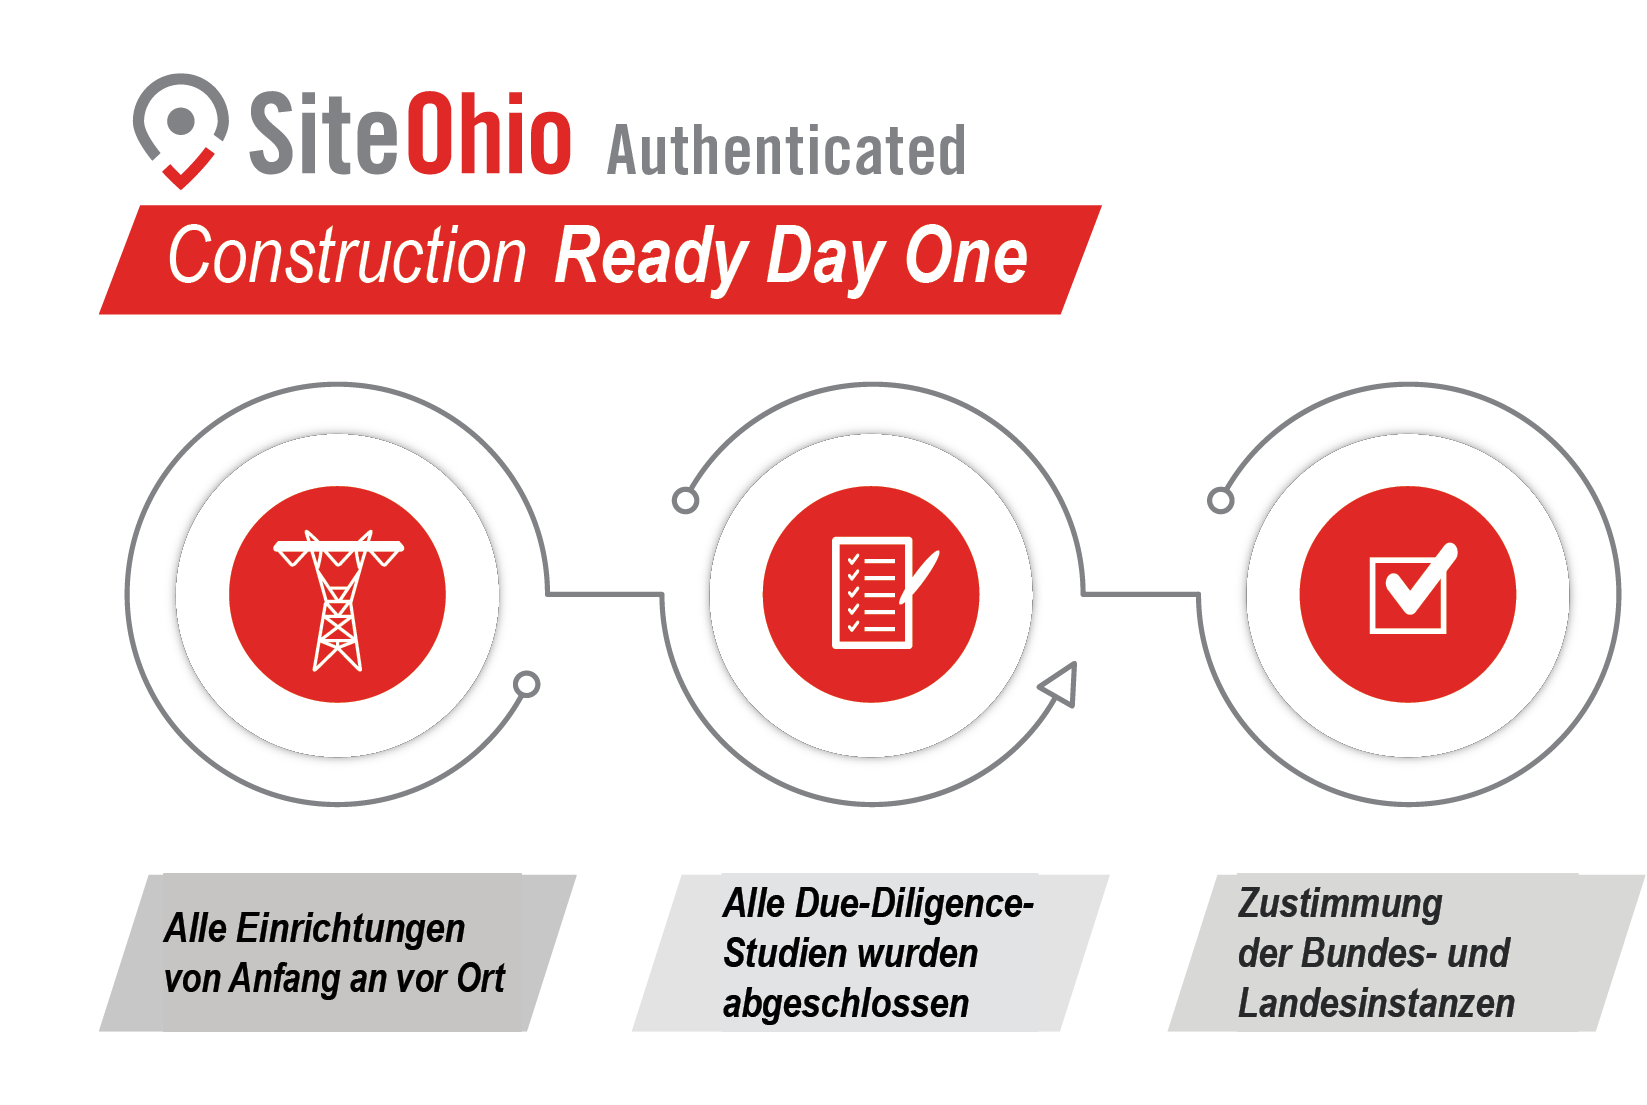 SiteOhio Authenticated Construction Ready Flowchart